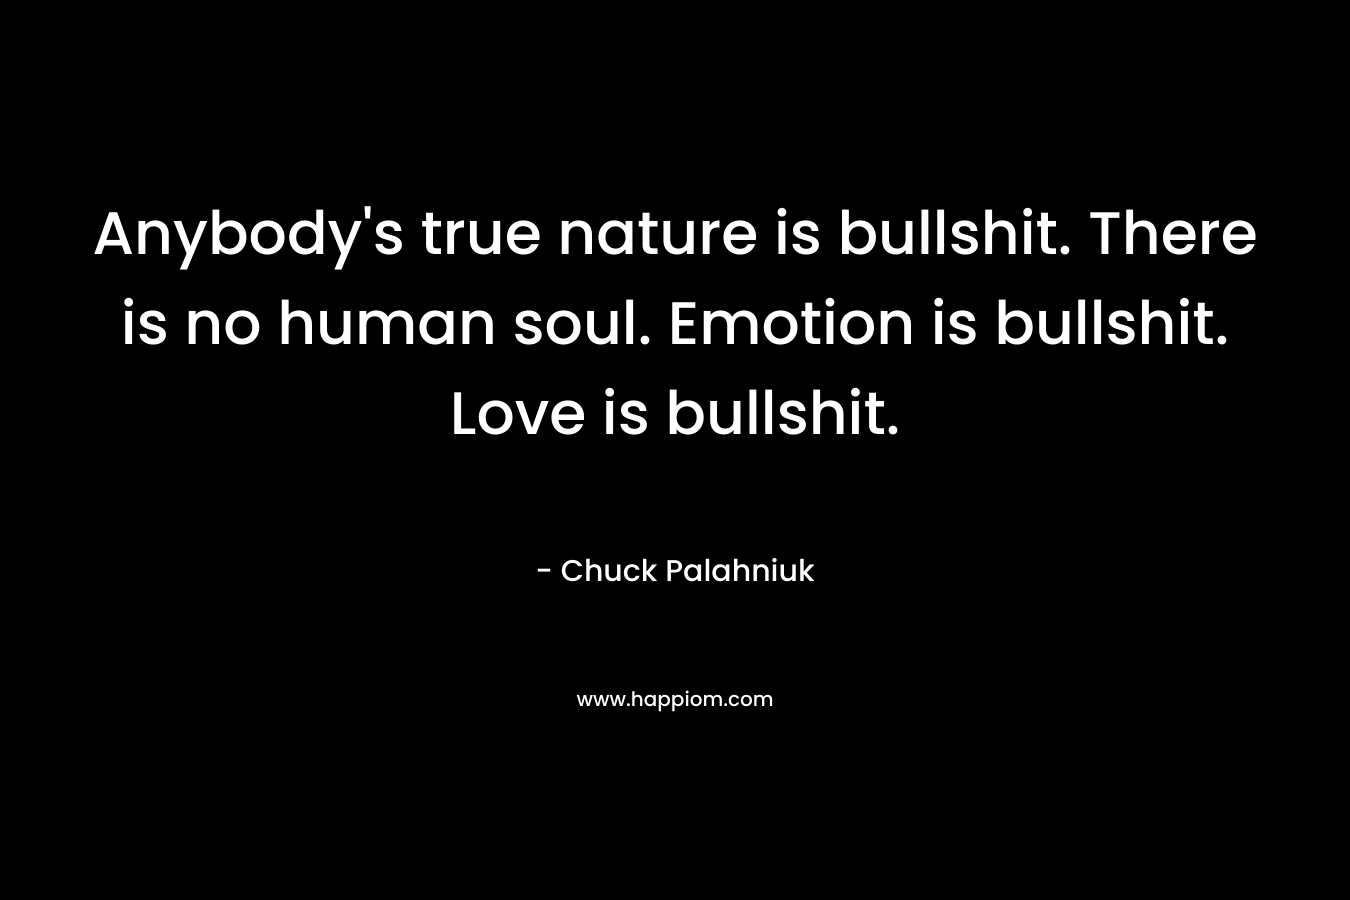 Anybody's true nature is bullshit. There is no human soul. Emotion is bullshit. Love is bullshit.